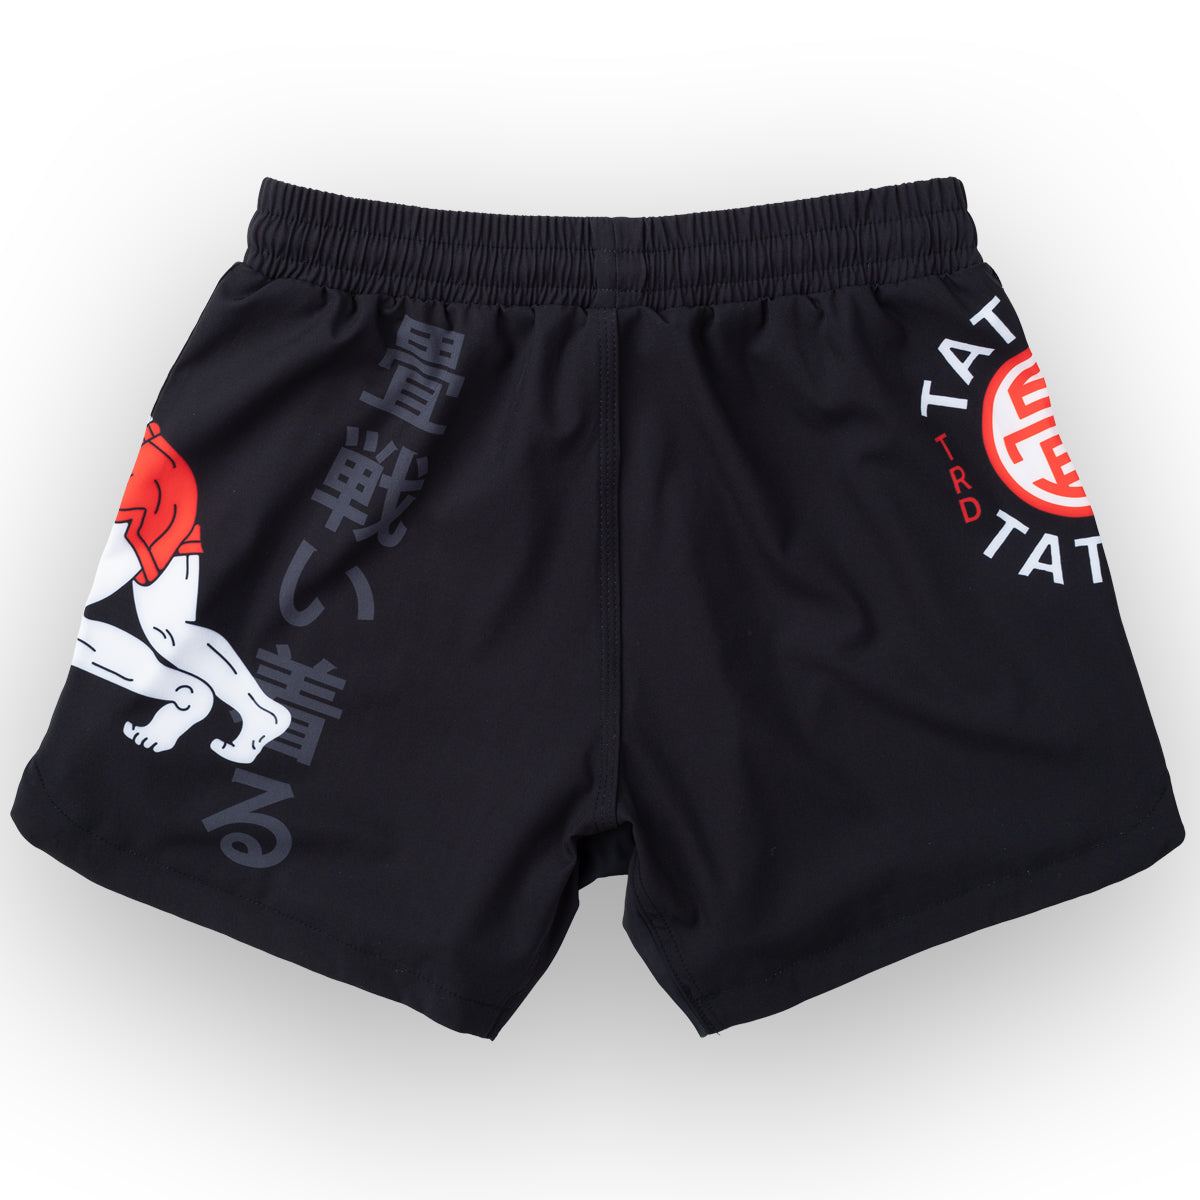 Tatami "Combat Club" Shorts